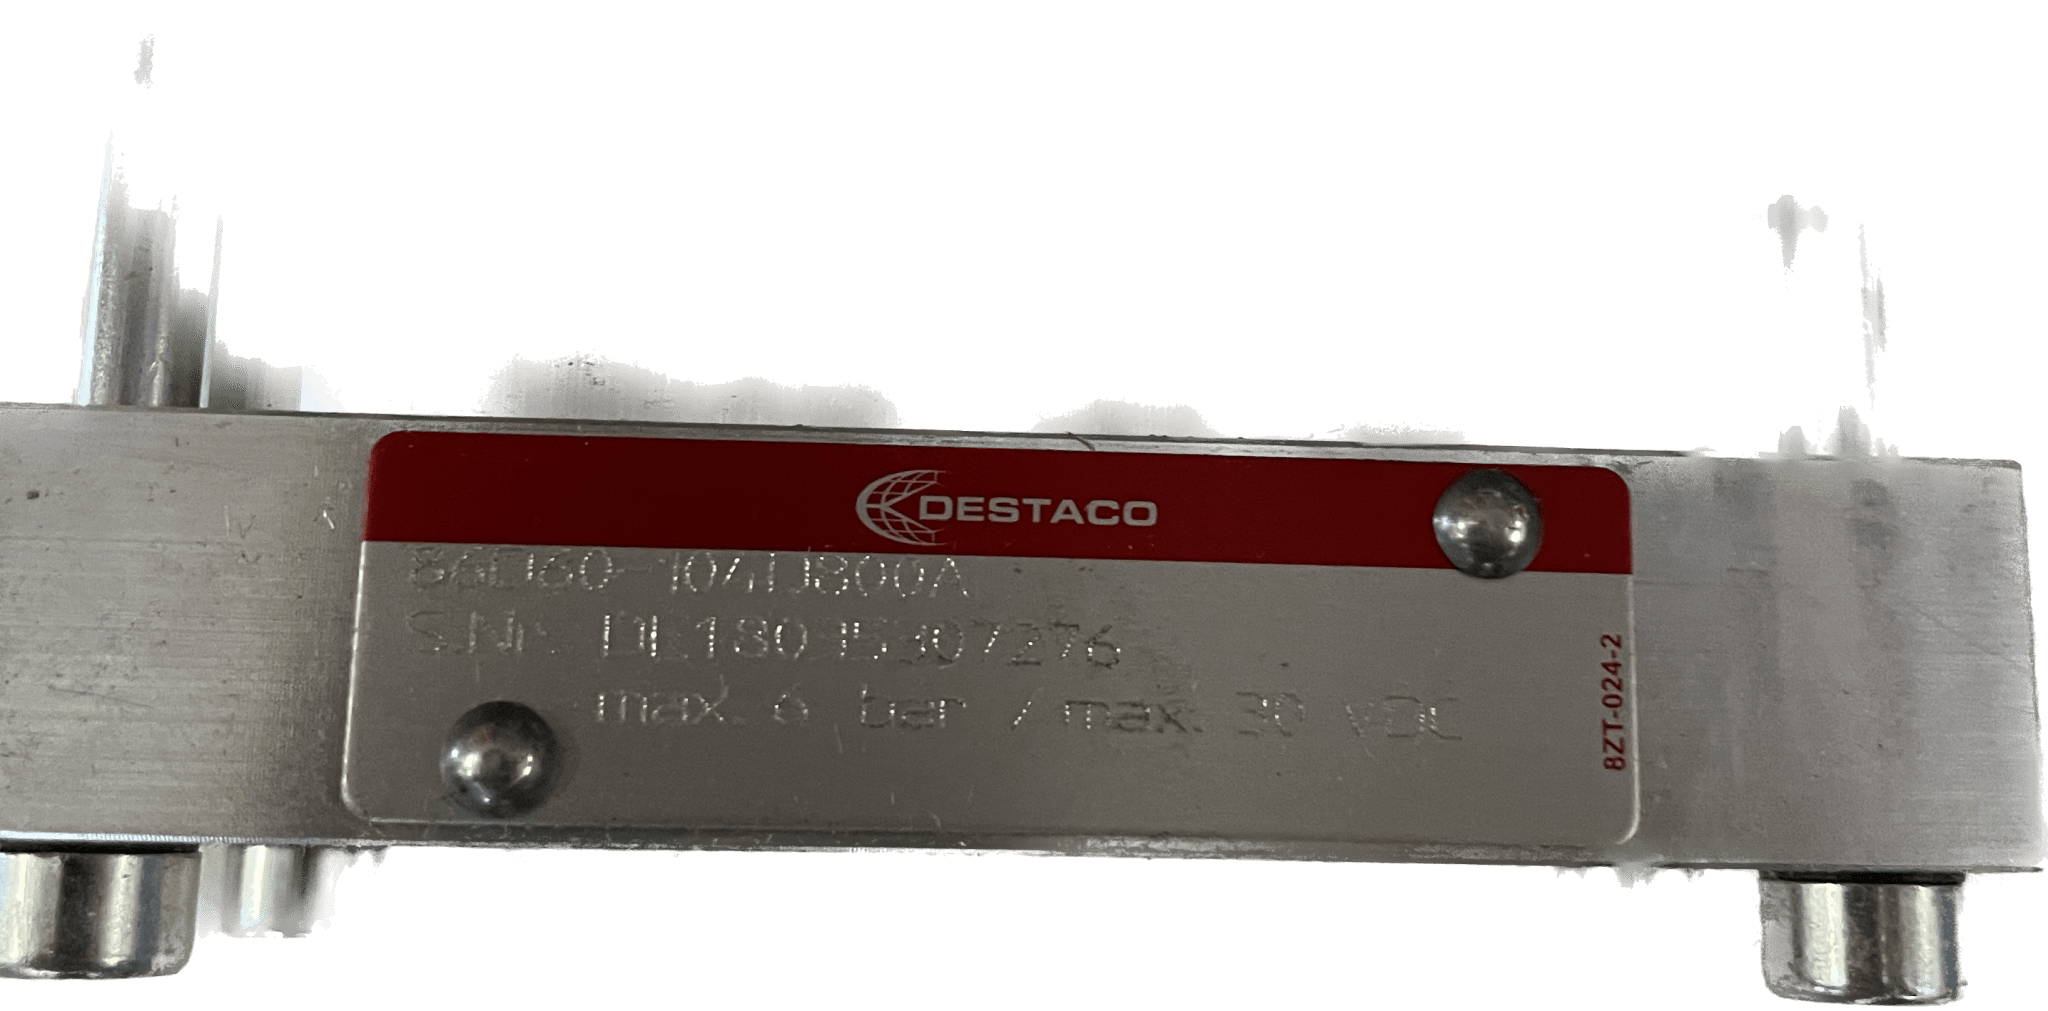 Destaco 86D40-104D800A - #product_category# | Klenk Maschinenhandel